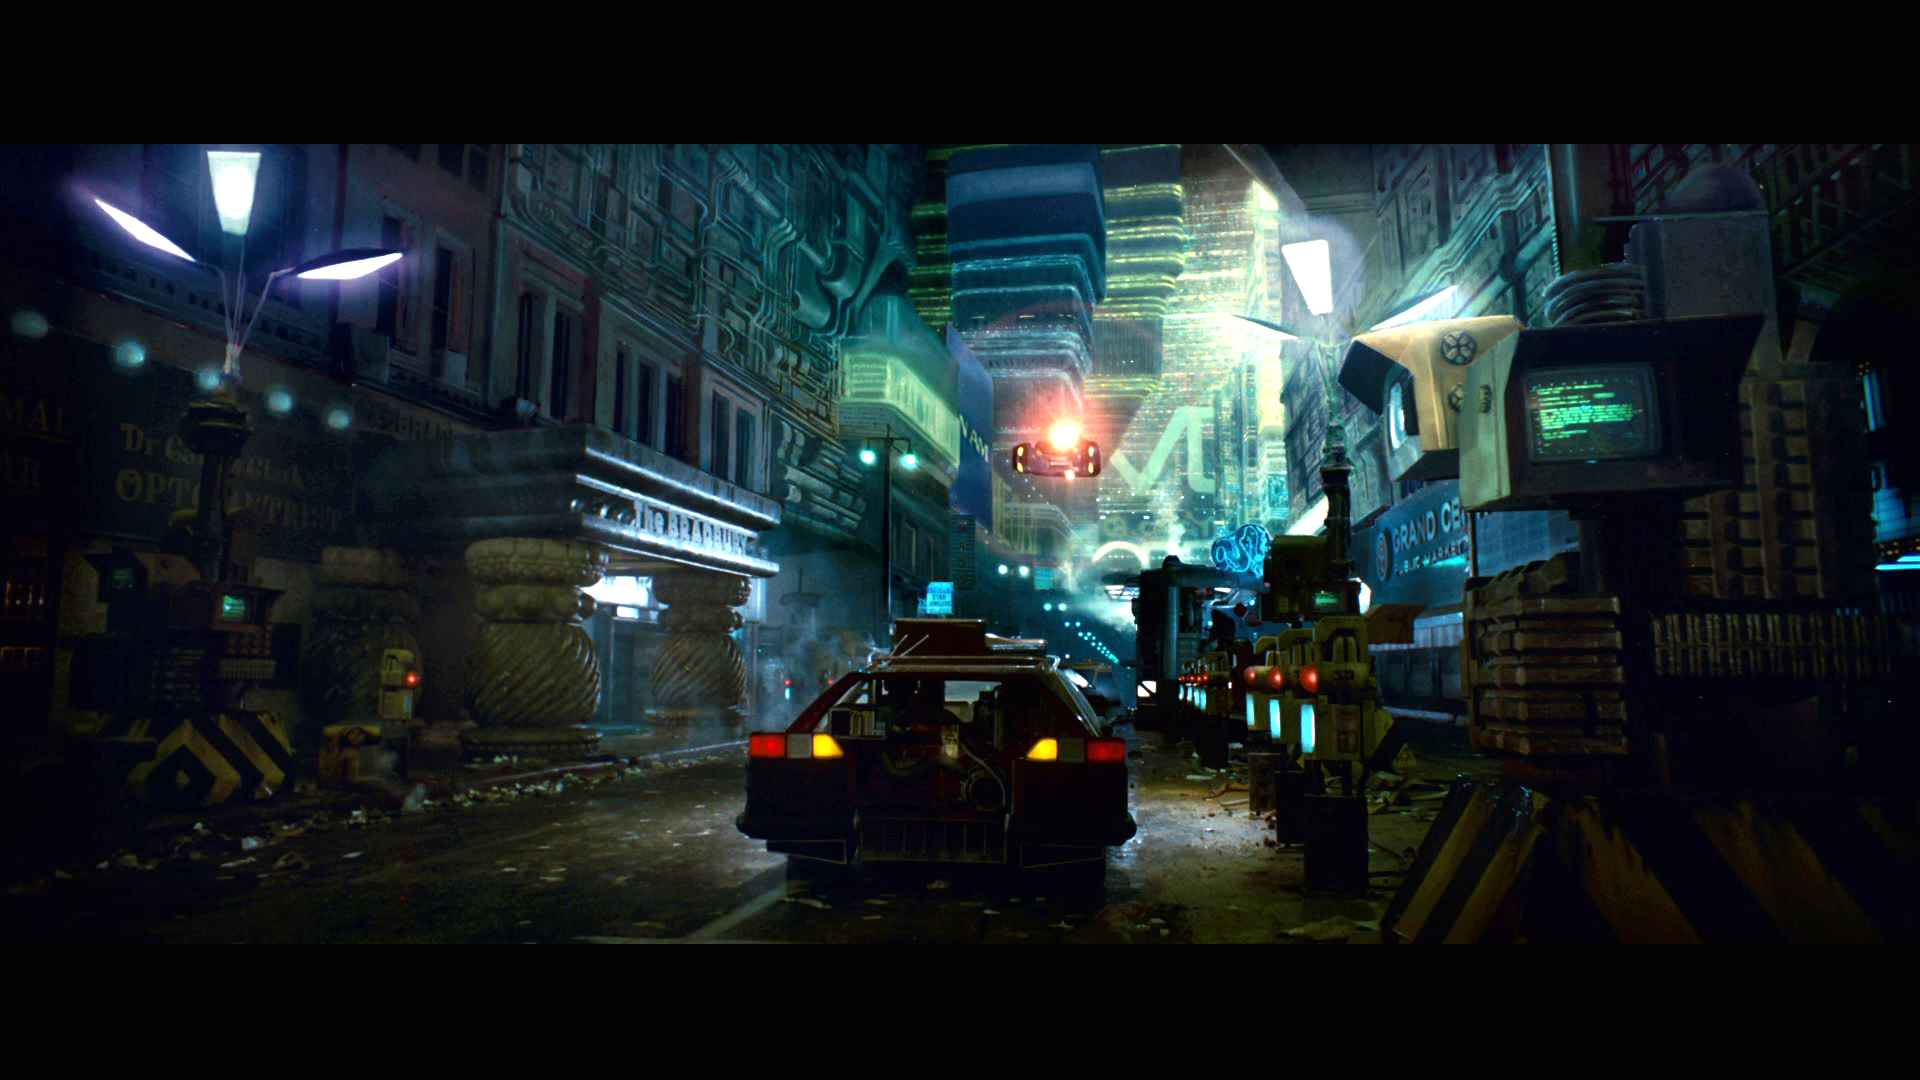 BLADE RUNNER drama sci Fi thriller action city fs wallpaper background